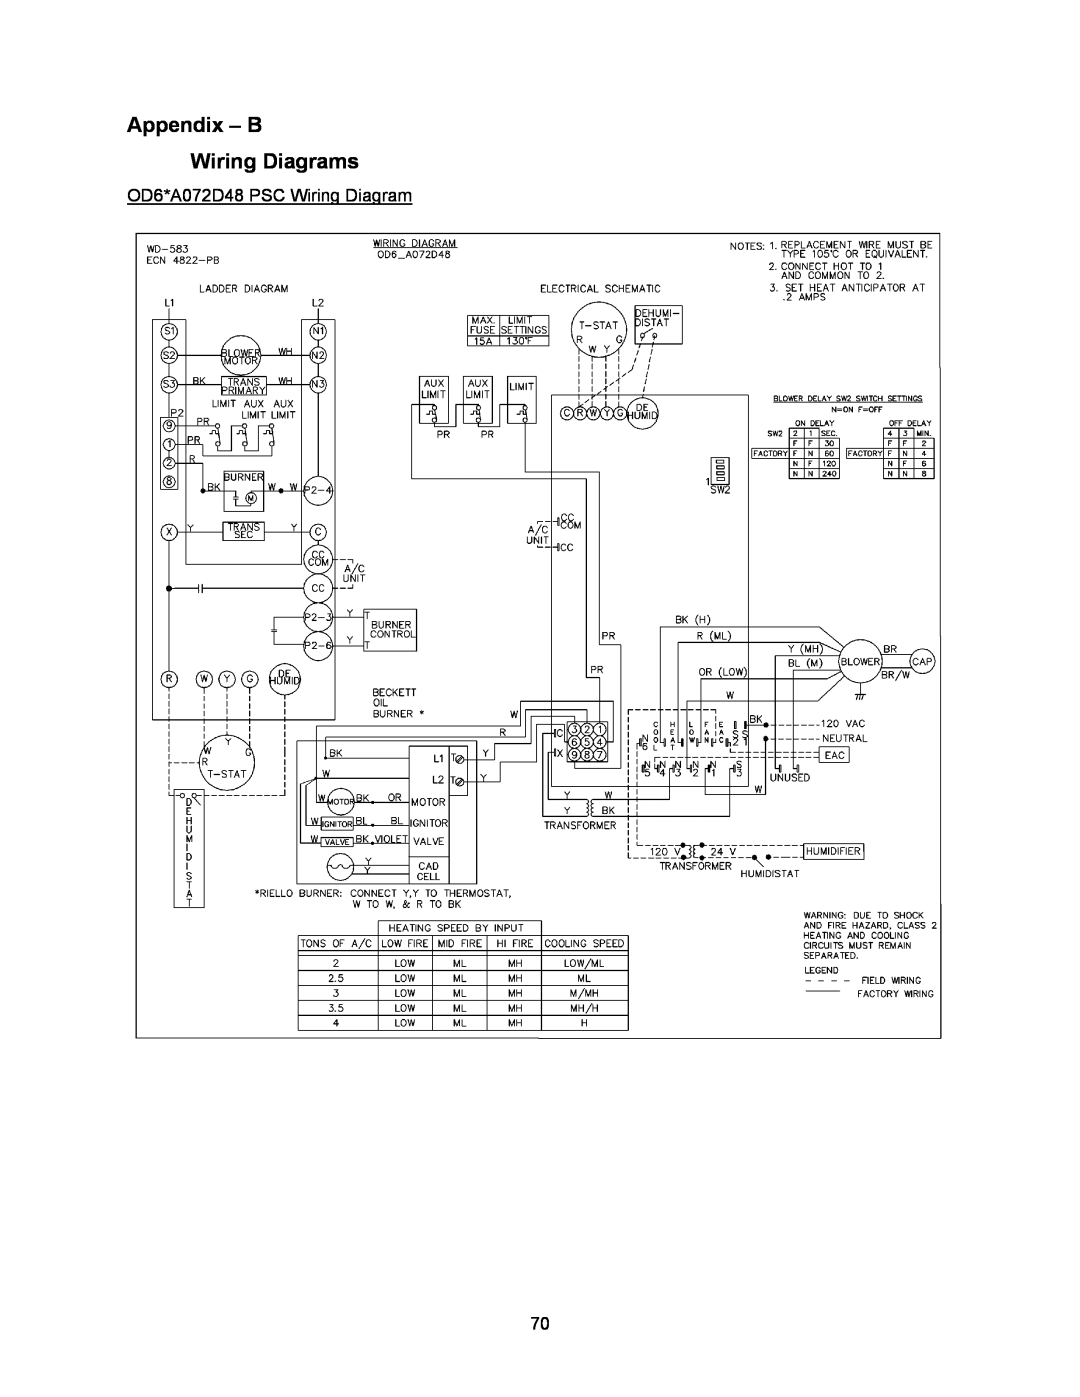 Thermo Products OD6FX072DV5R, OD6FA072DV5R, OD6RX072DV5R Appendix - B Wiring Diagrams, OD6*A072D48 PSC Wiring Diagram 